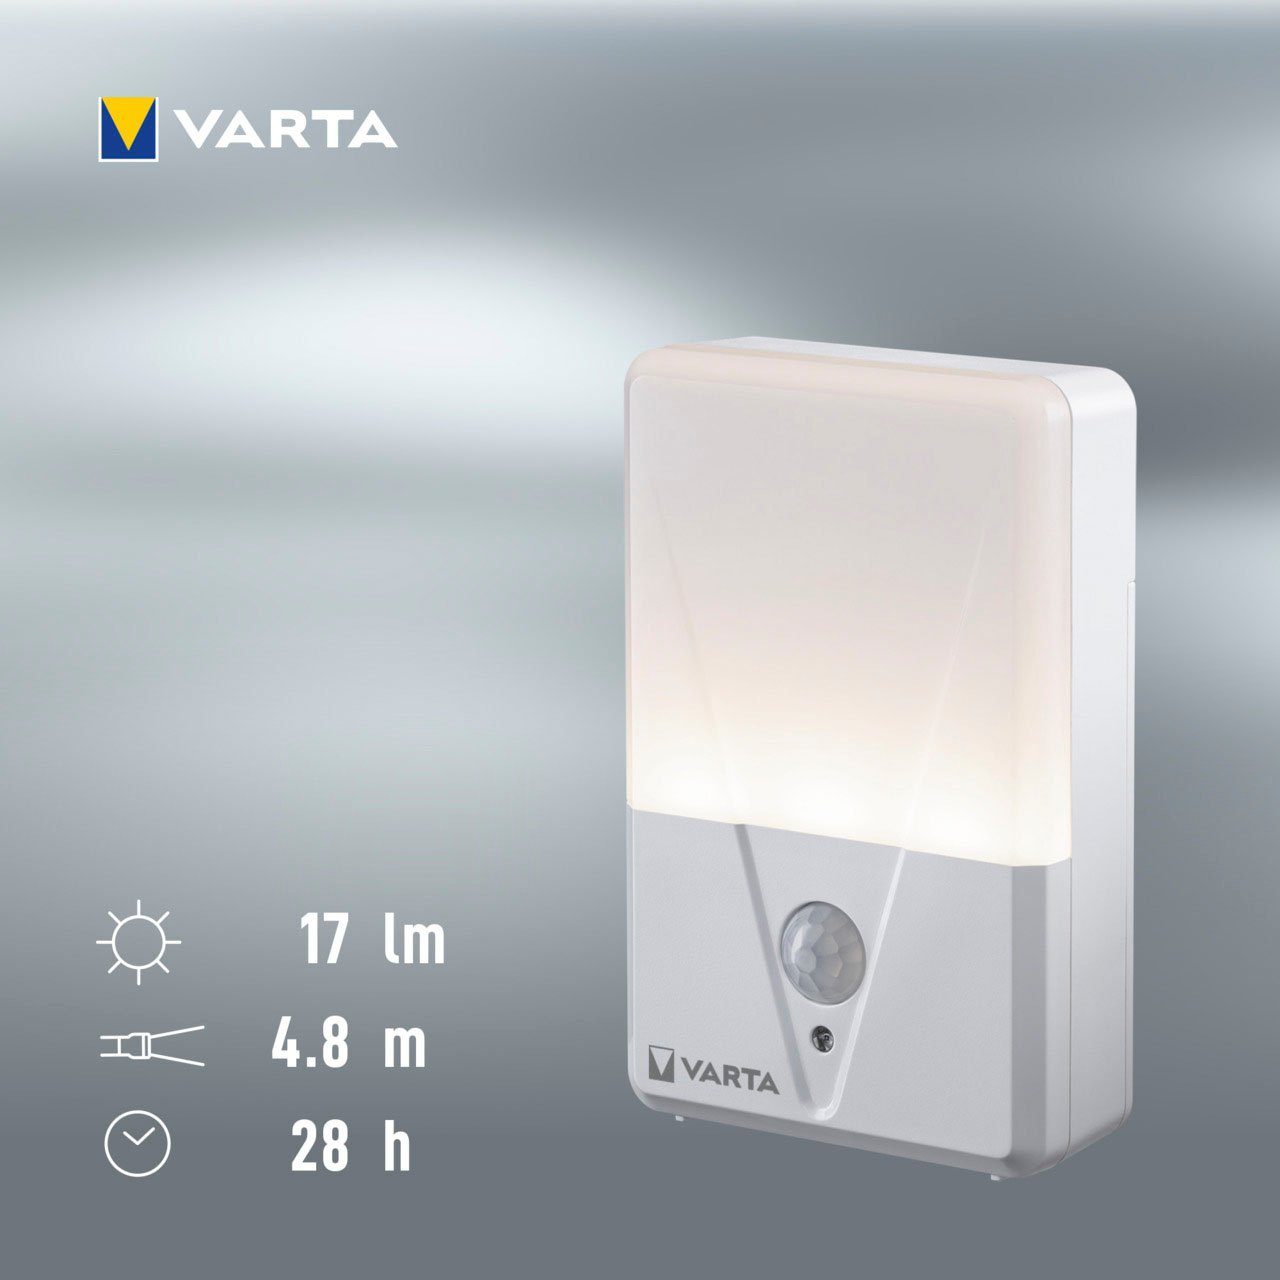 VARTA Nachtlicht integriert, LED Warmweiß Nachtlicht VARTA 3xAAA, batteriebetrieben inkl. Motion ist Sensor fest